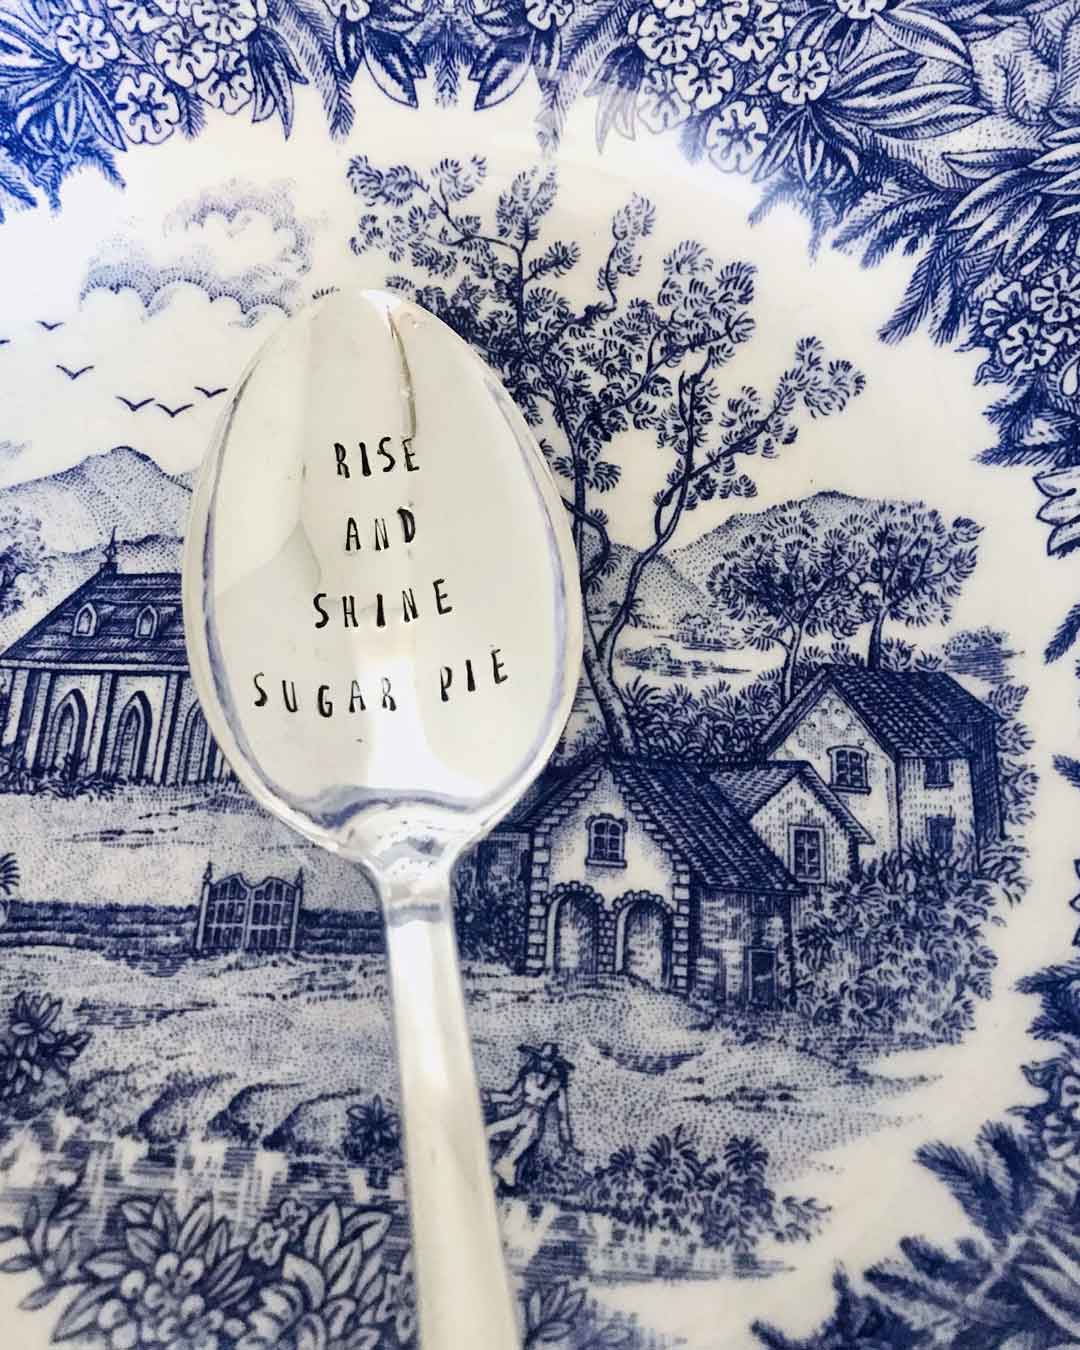 Vintage Silver Hand-stamped spoon